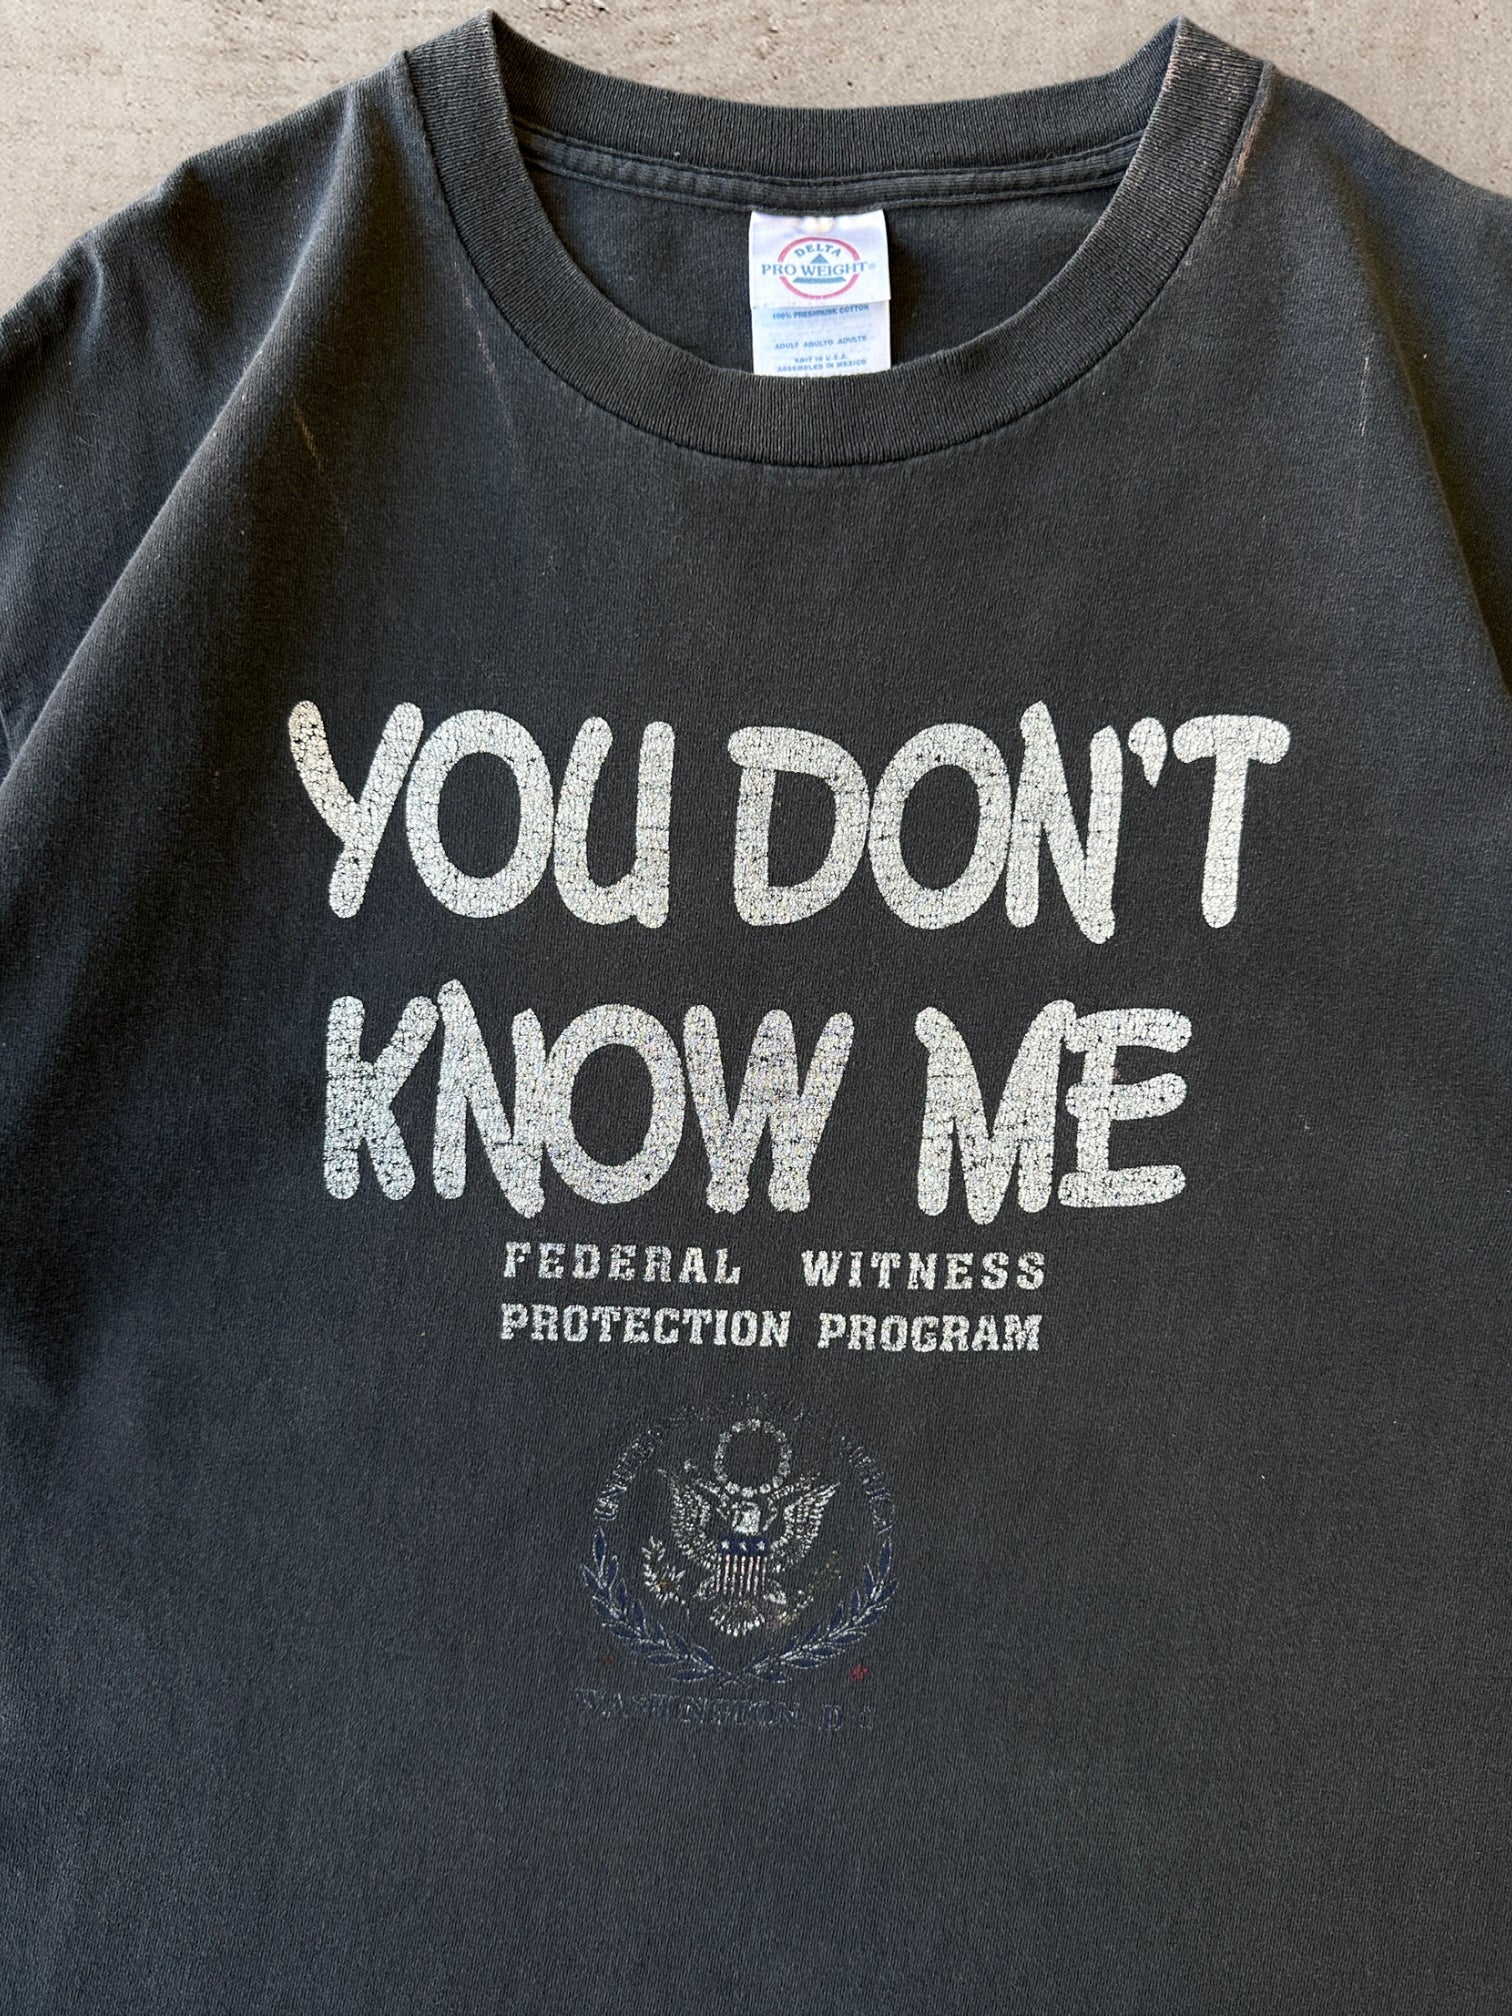 90s Witness Protection Program T-Shirt - Medium